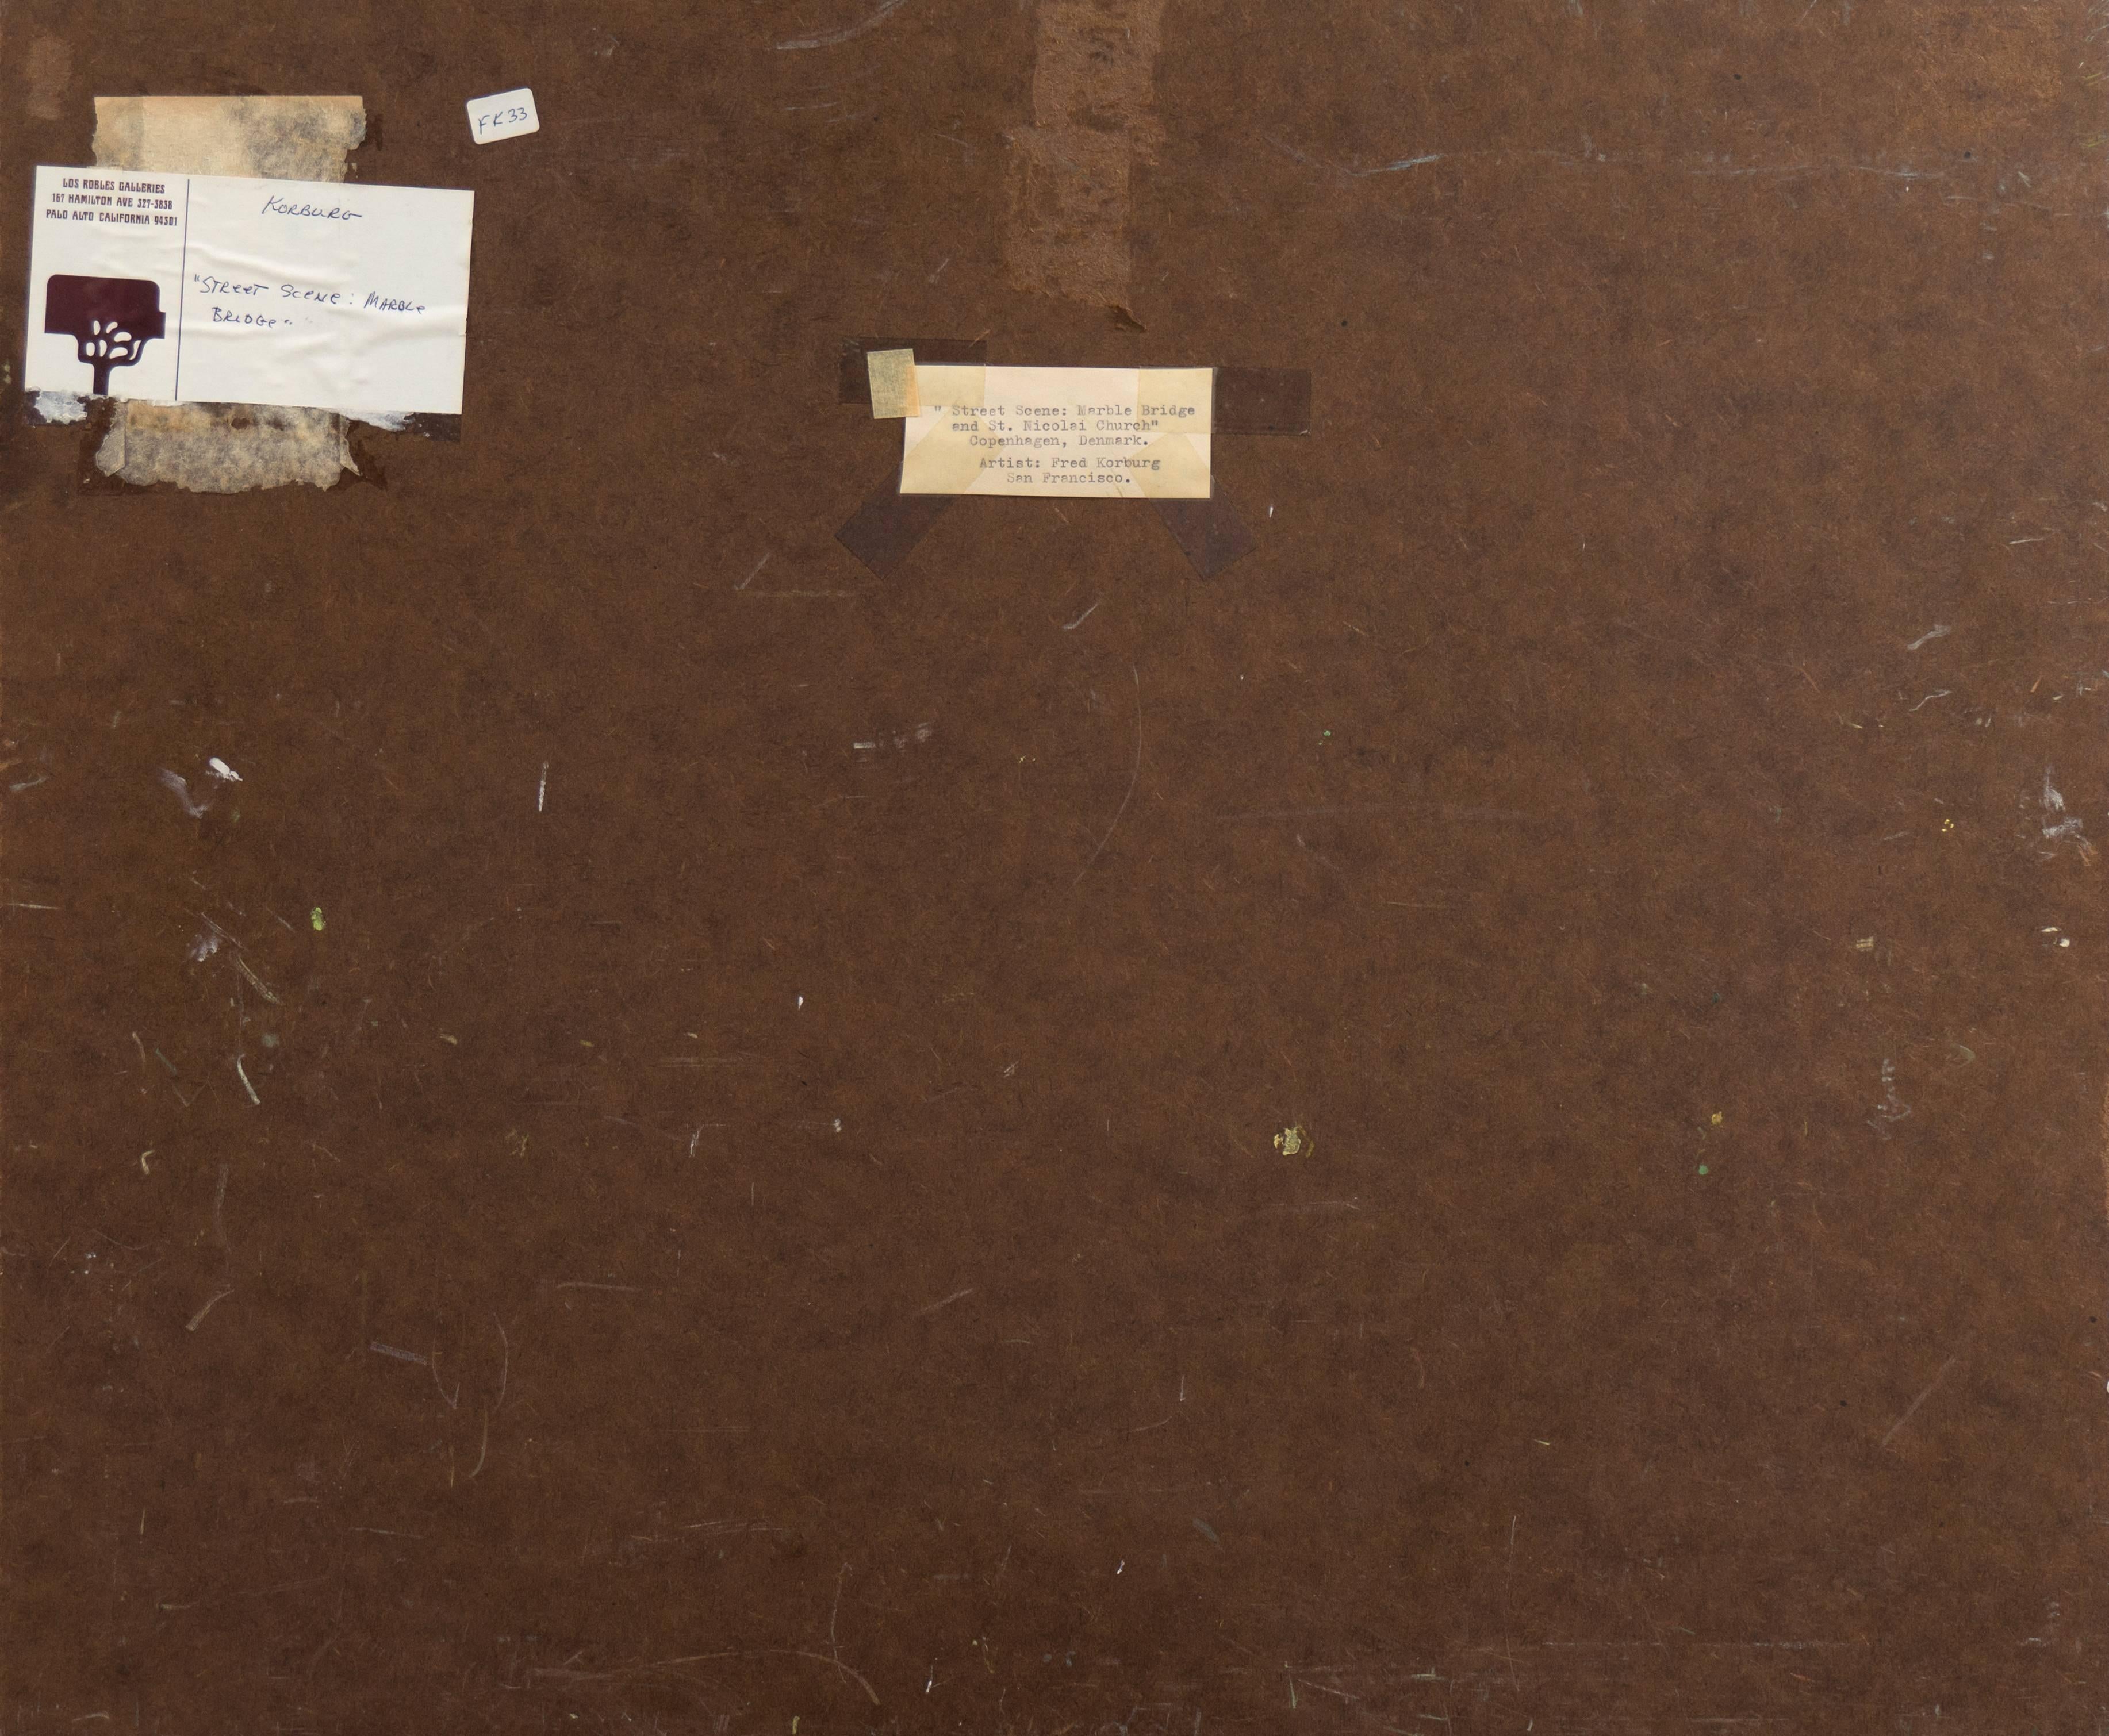 Signed lower left, 'Fred Korburg', dated 1971; additionally titled on old label verso 'Street Scene: Marble Bridge and St. Nicolai Church, Copenhagen, Denmark'.
Provenance: Los Robles Galleries, Palo Alto, California. 

Born in Denmark, Frederick